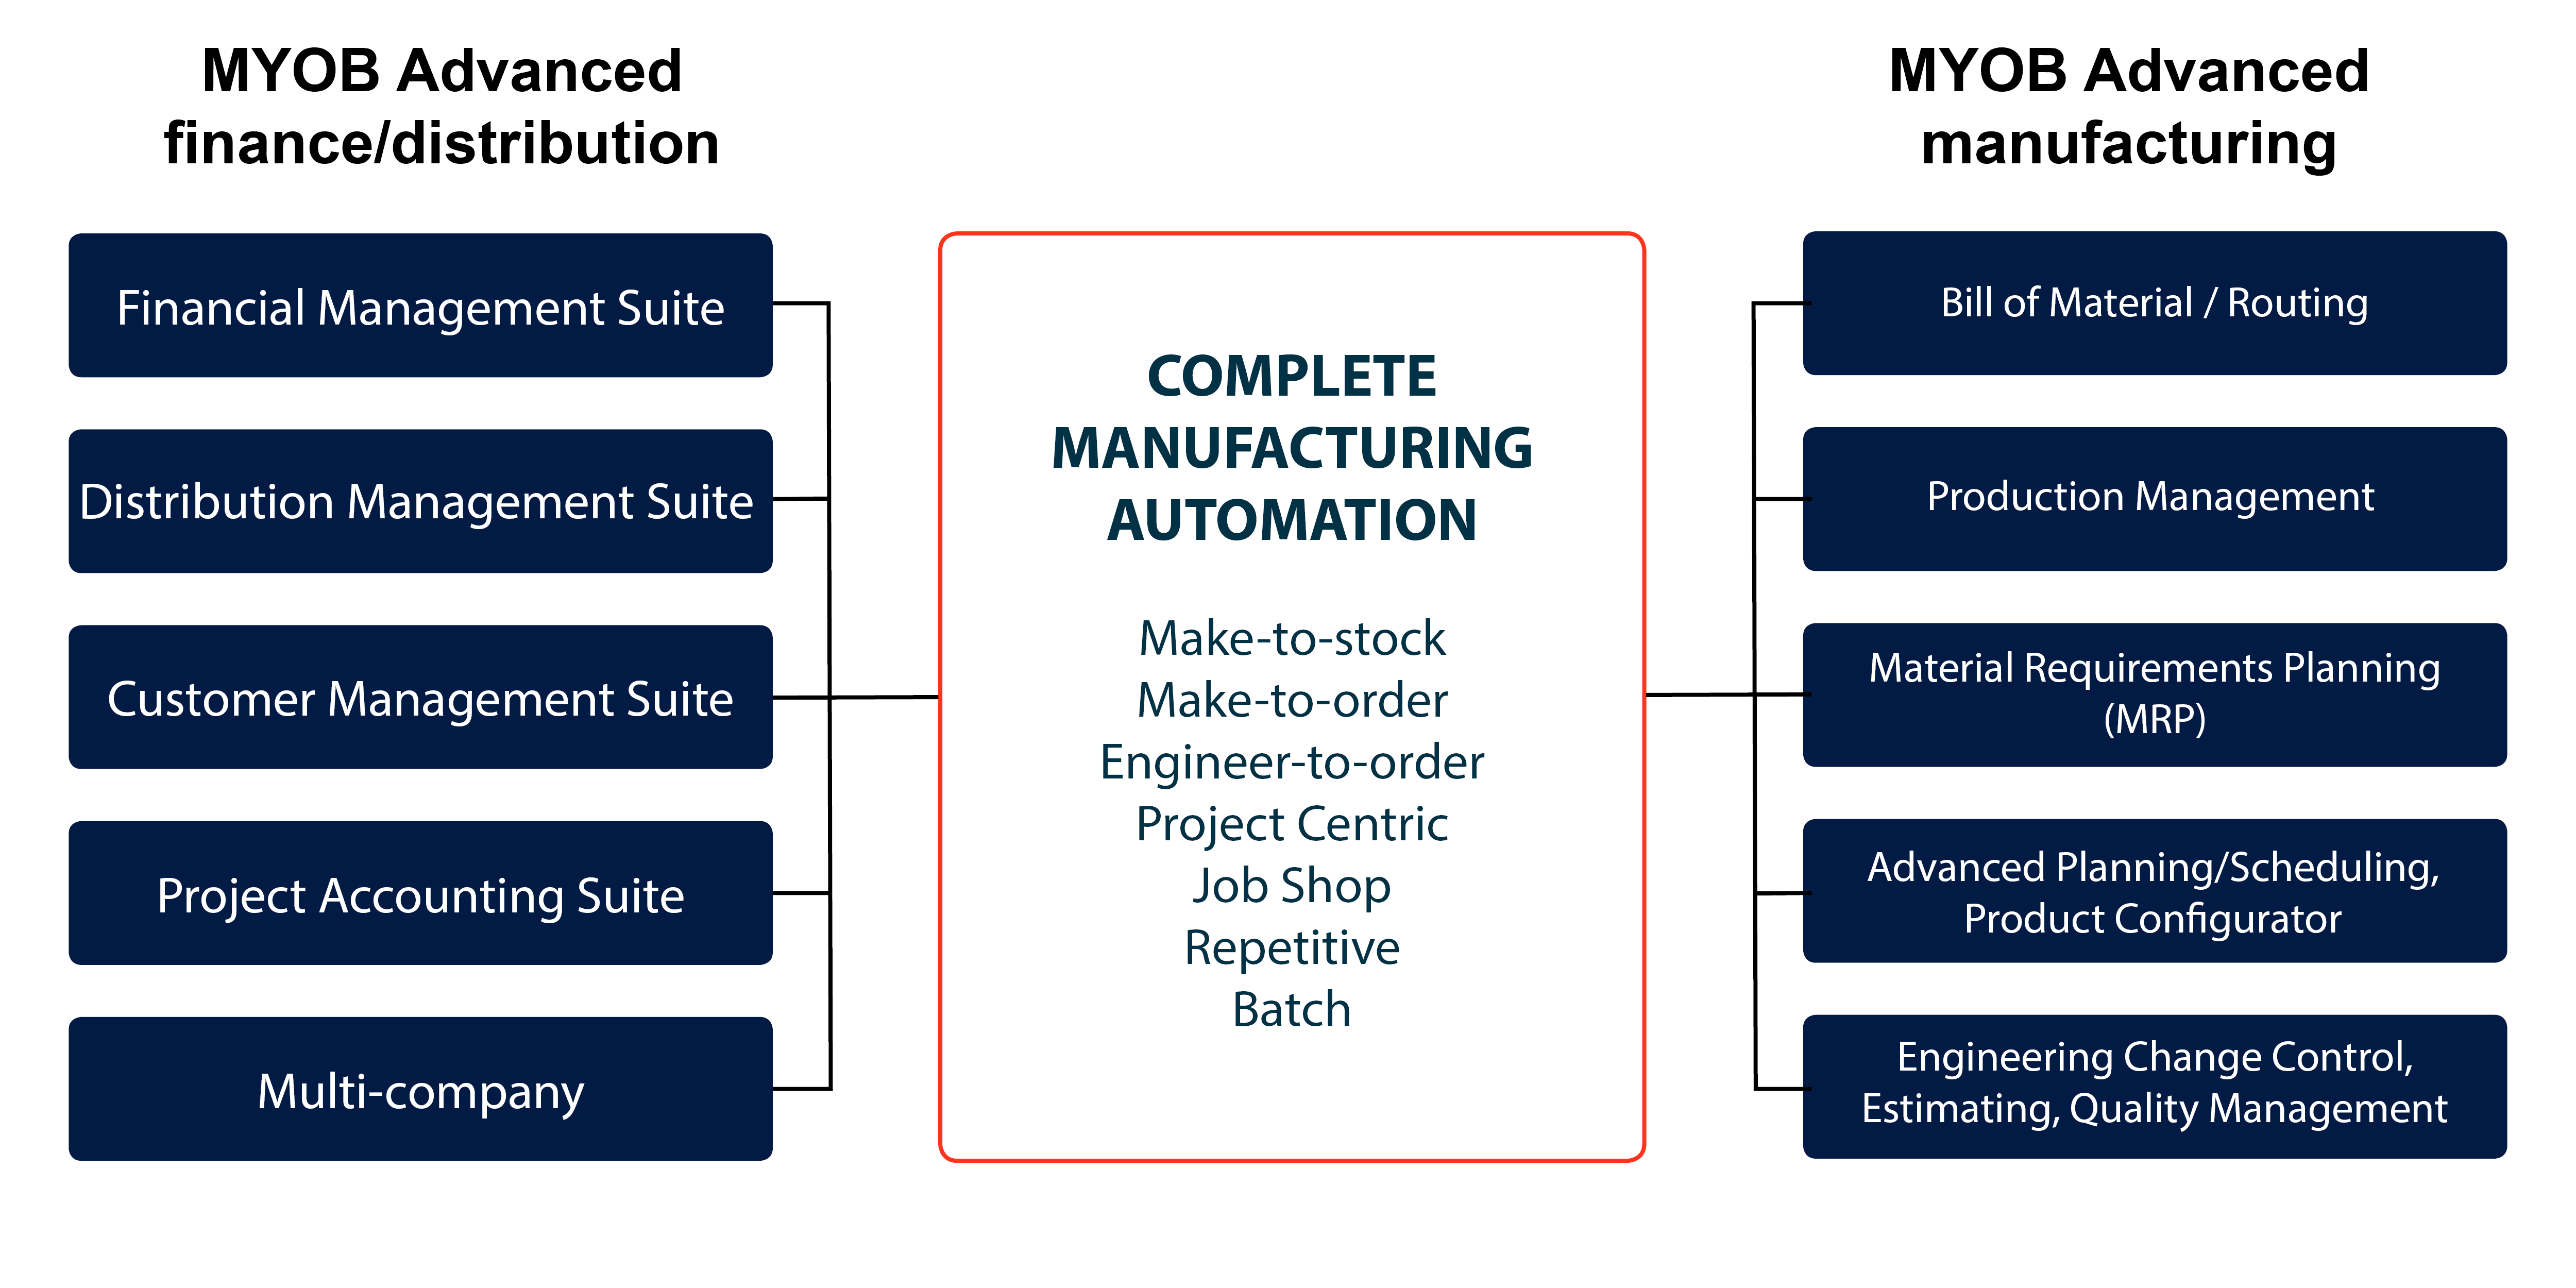 MYOB Advanced Manufacturing